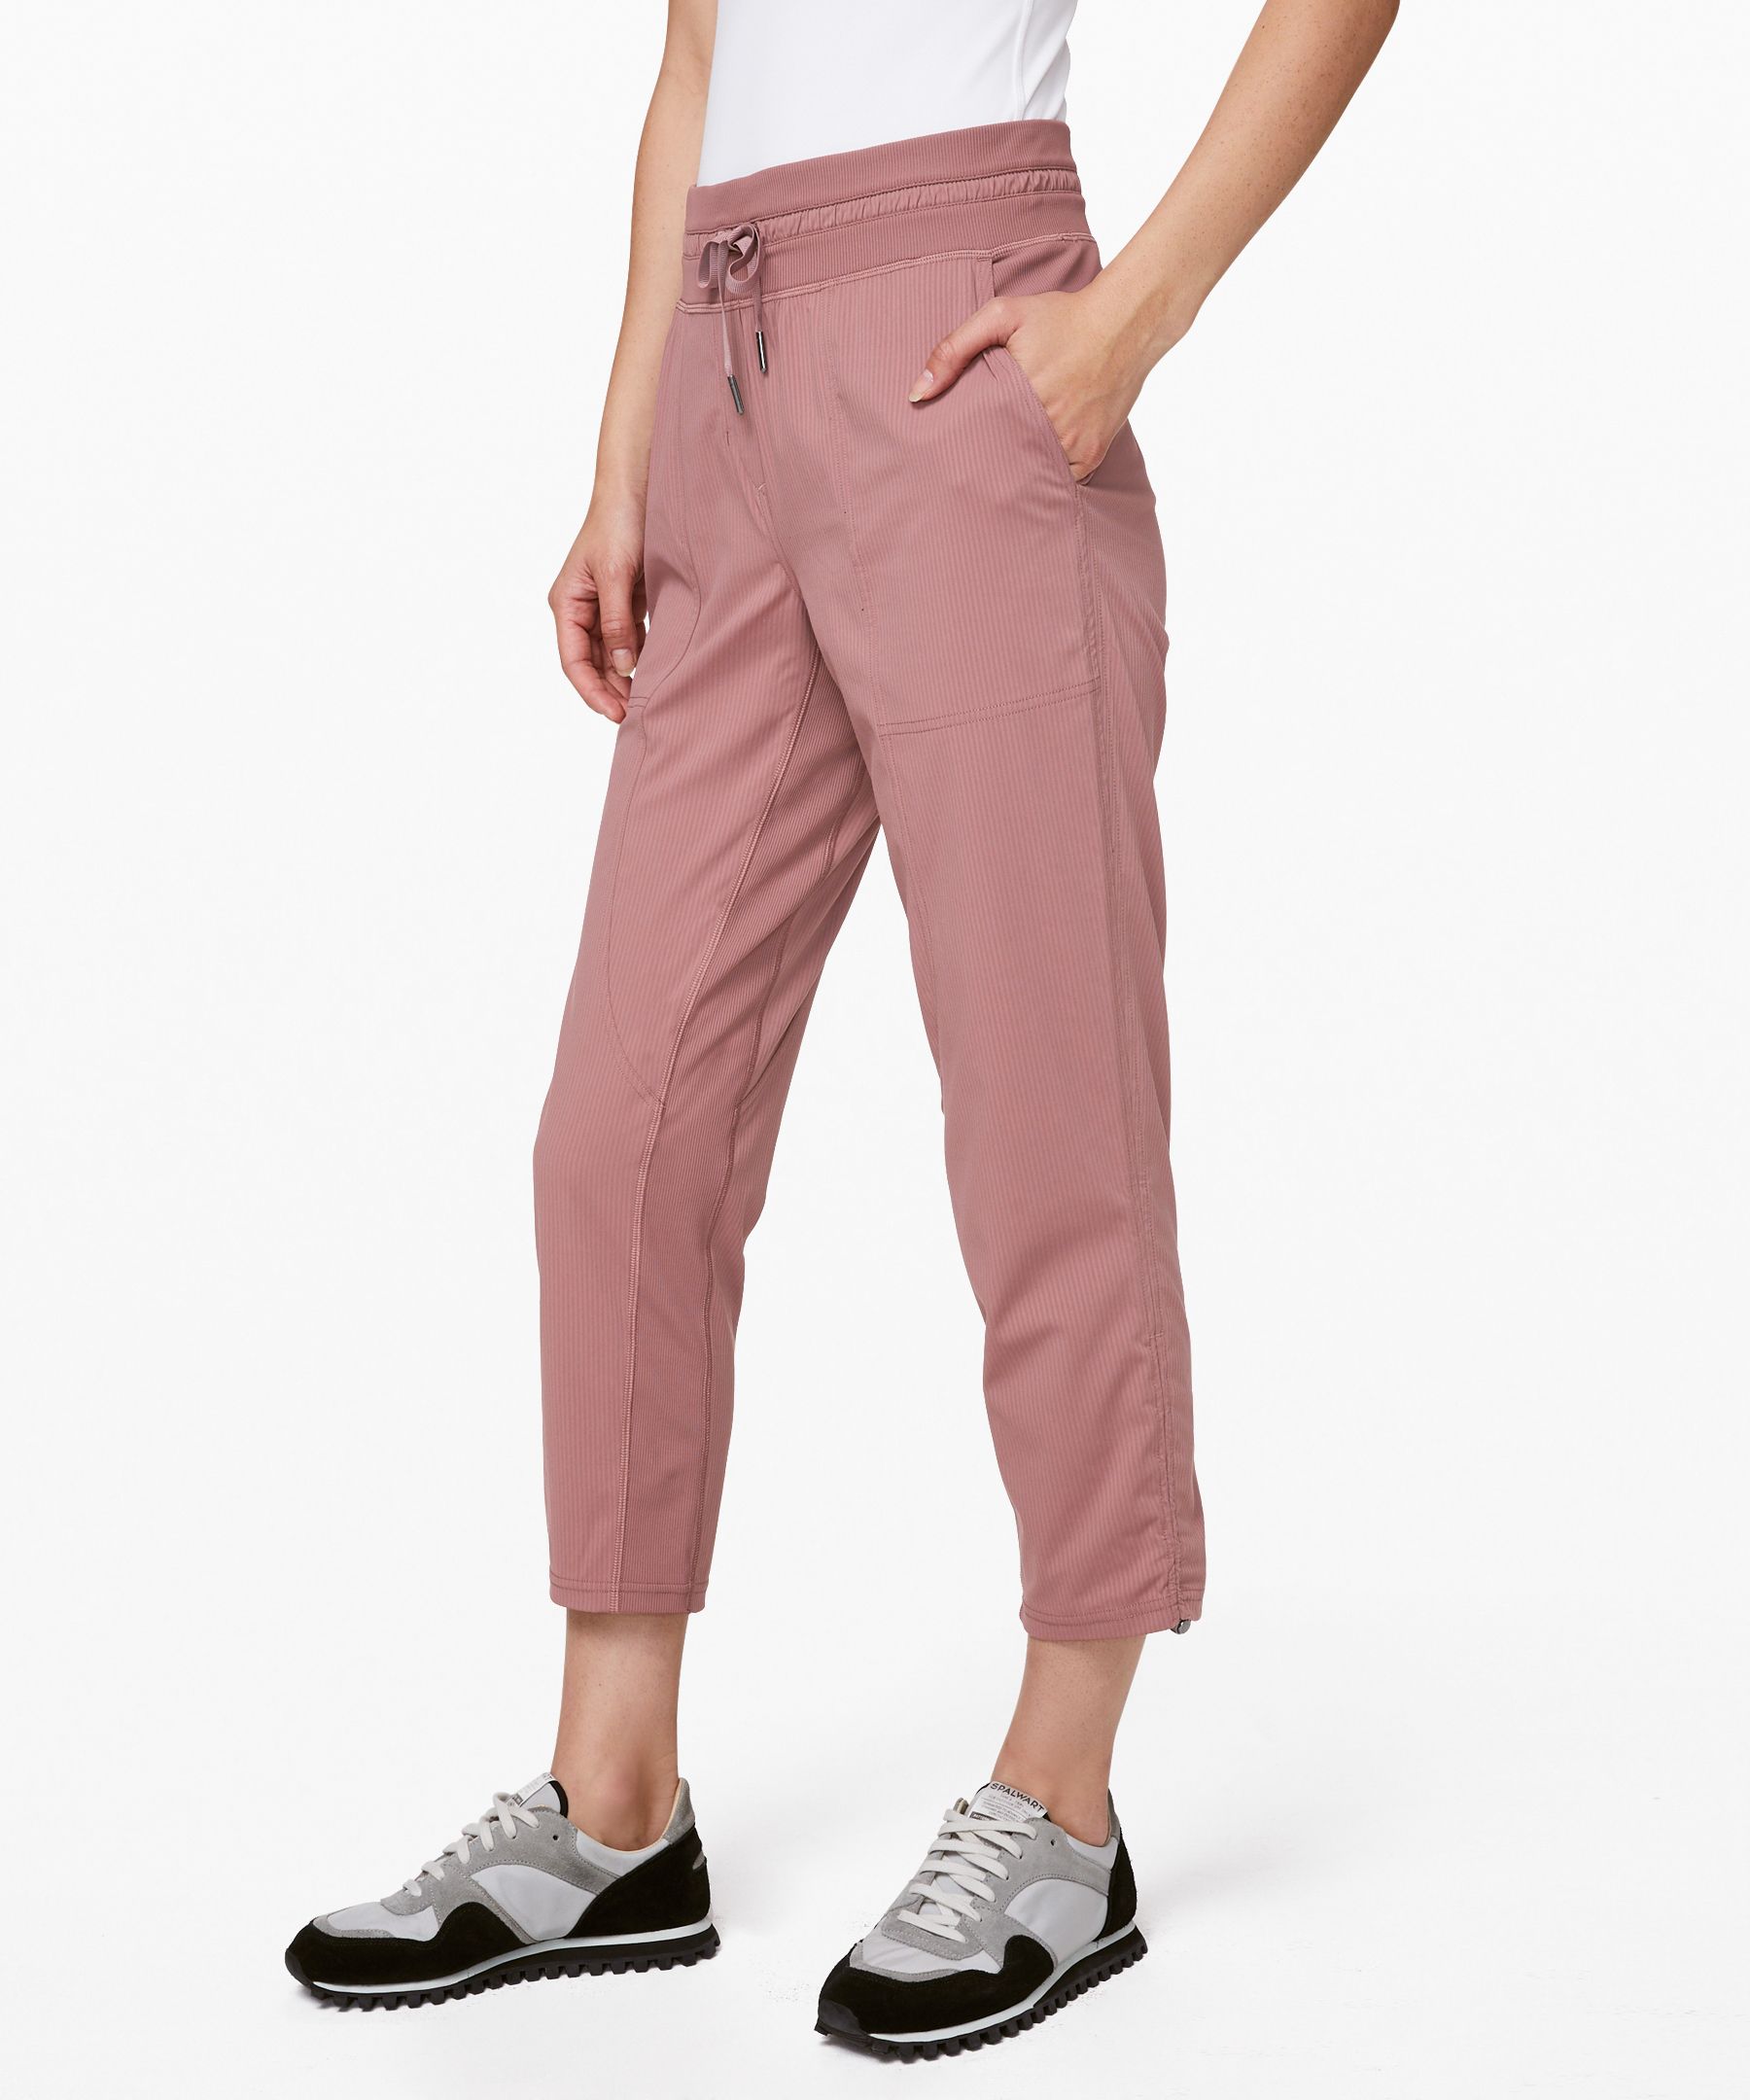 Lululemon Dance Studio Pants Lined Purple Size 6 - $31 (71% Off Retail) -  From Paige